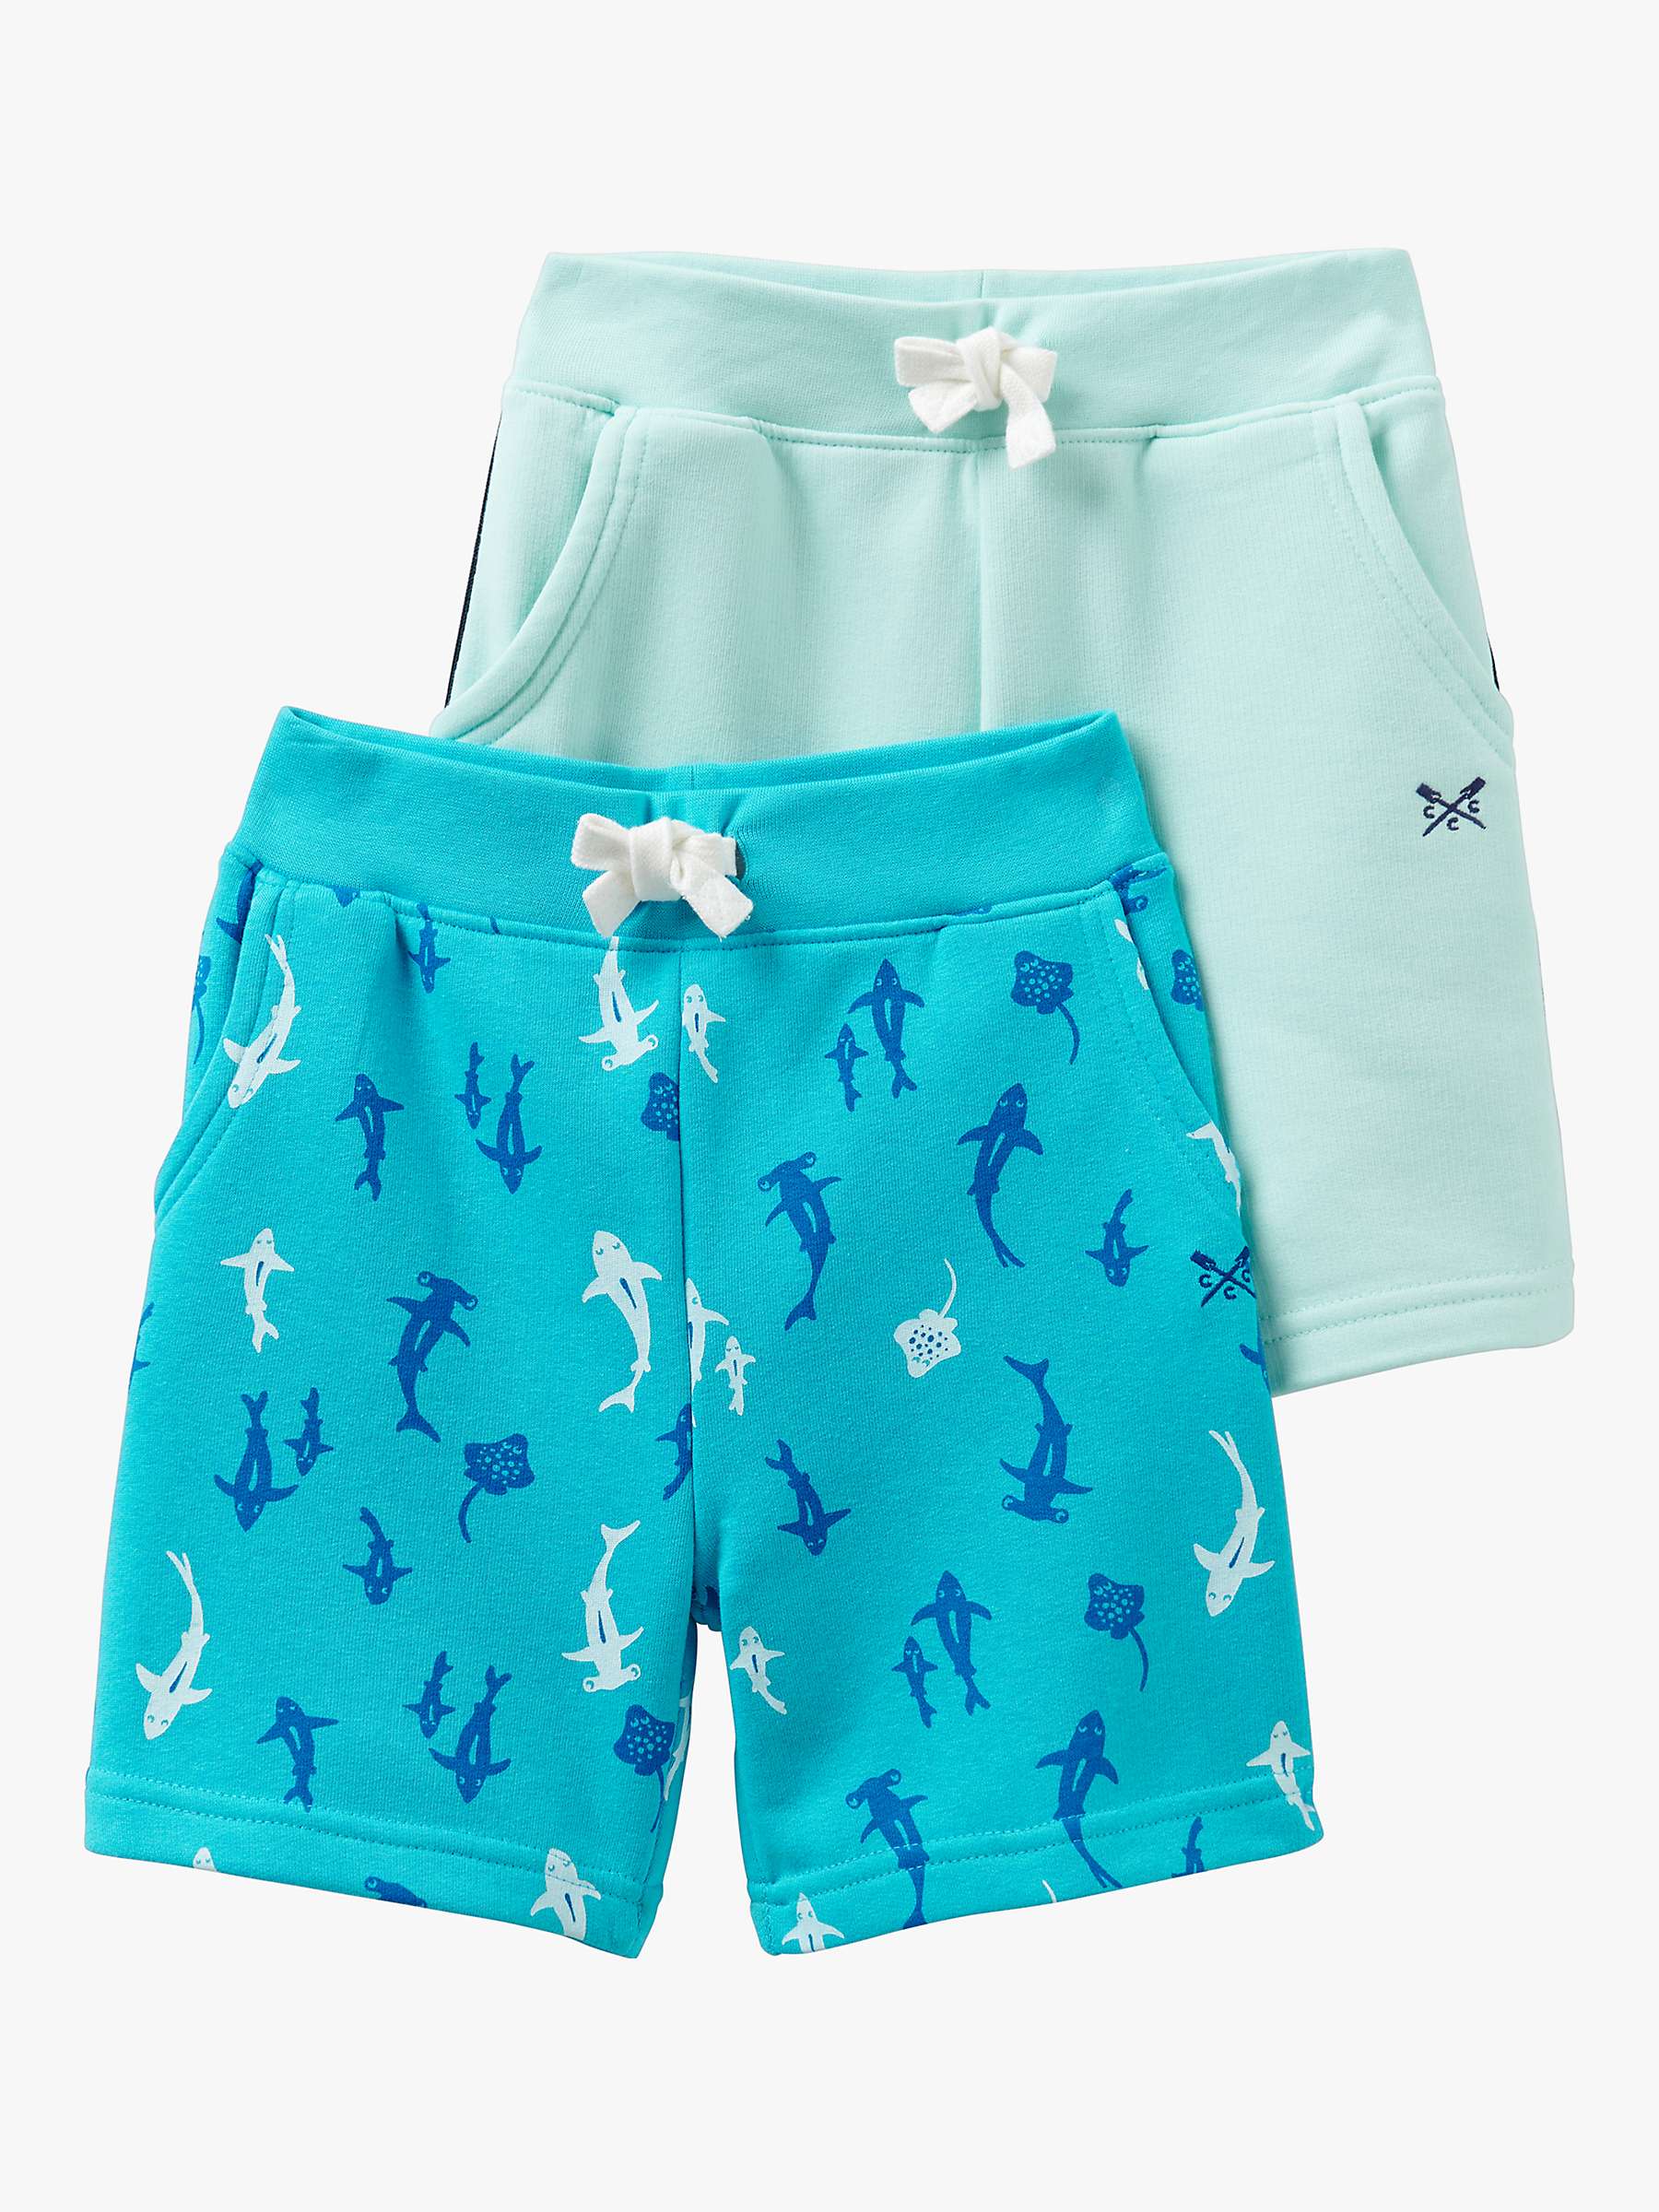 Buy Crew Clothing Kids' Shark Print & Side Stripe Jersey Shorts Set, Pack of 2, Blue/Green Online at johnlewis.com